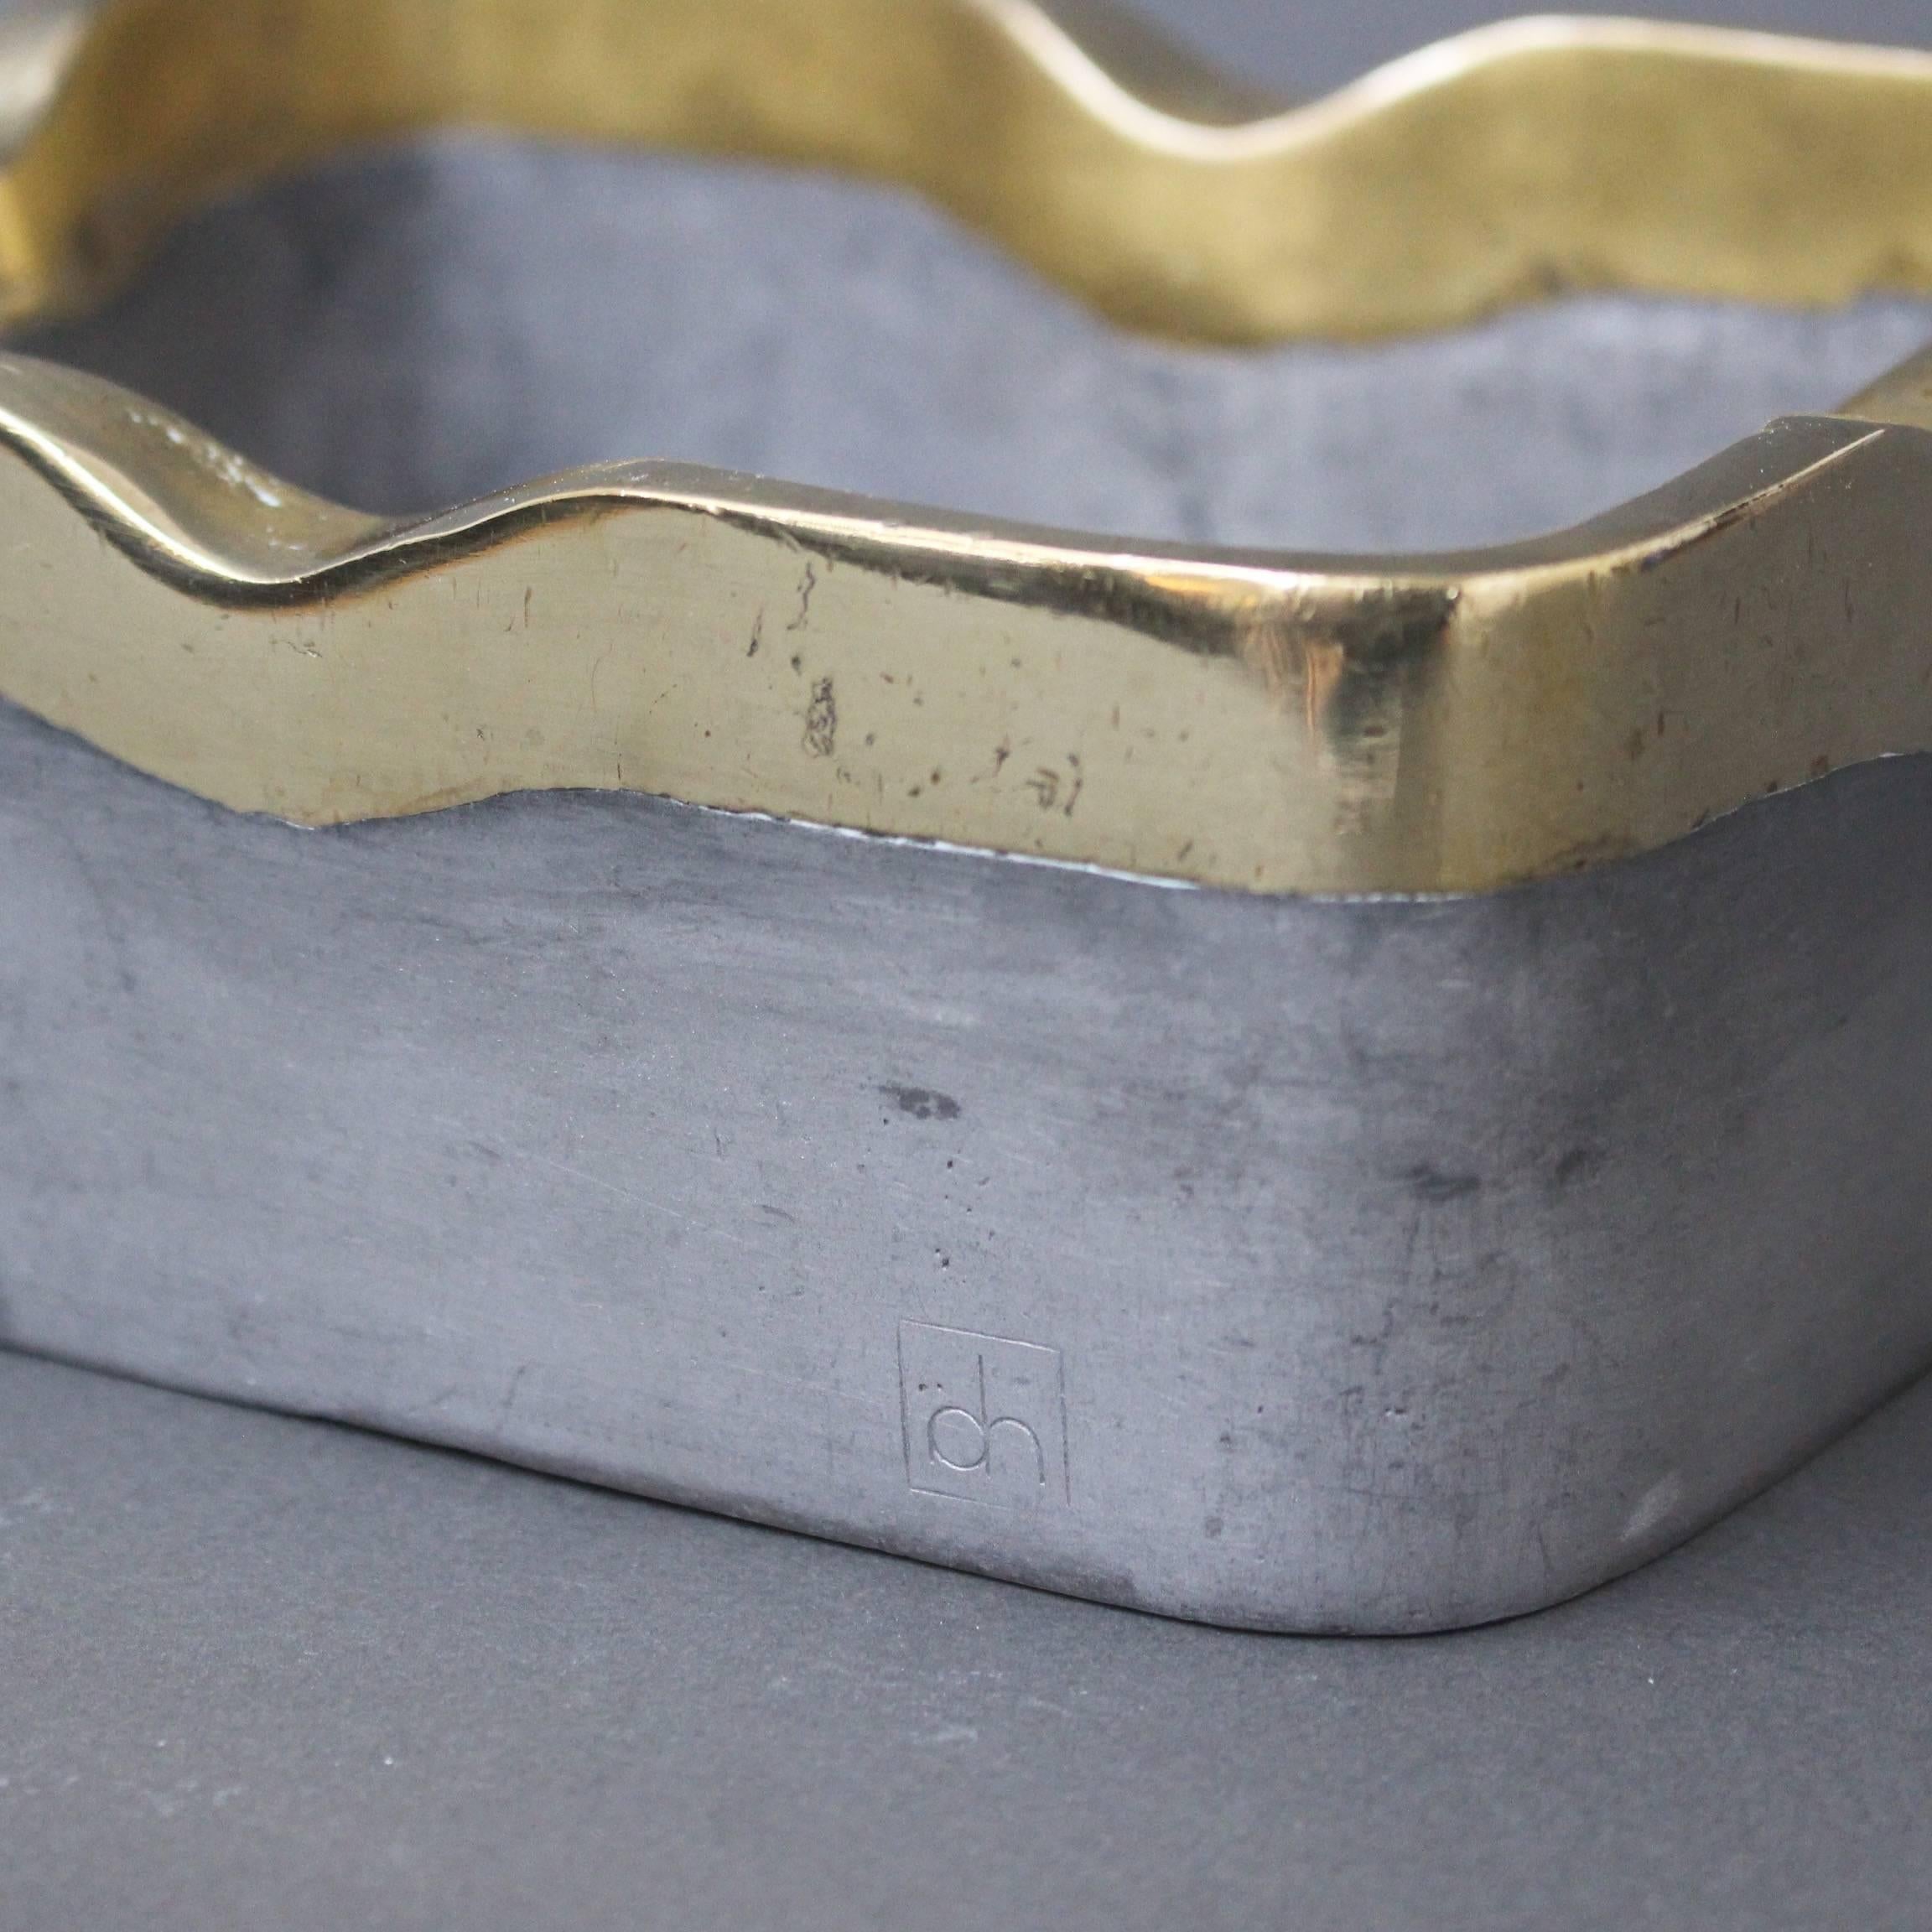 Aluminum Aluminium and Brass Brutalist Style Decorative Ashtray by David Marshall c. 1980